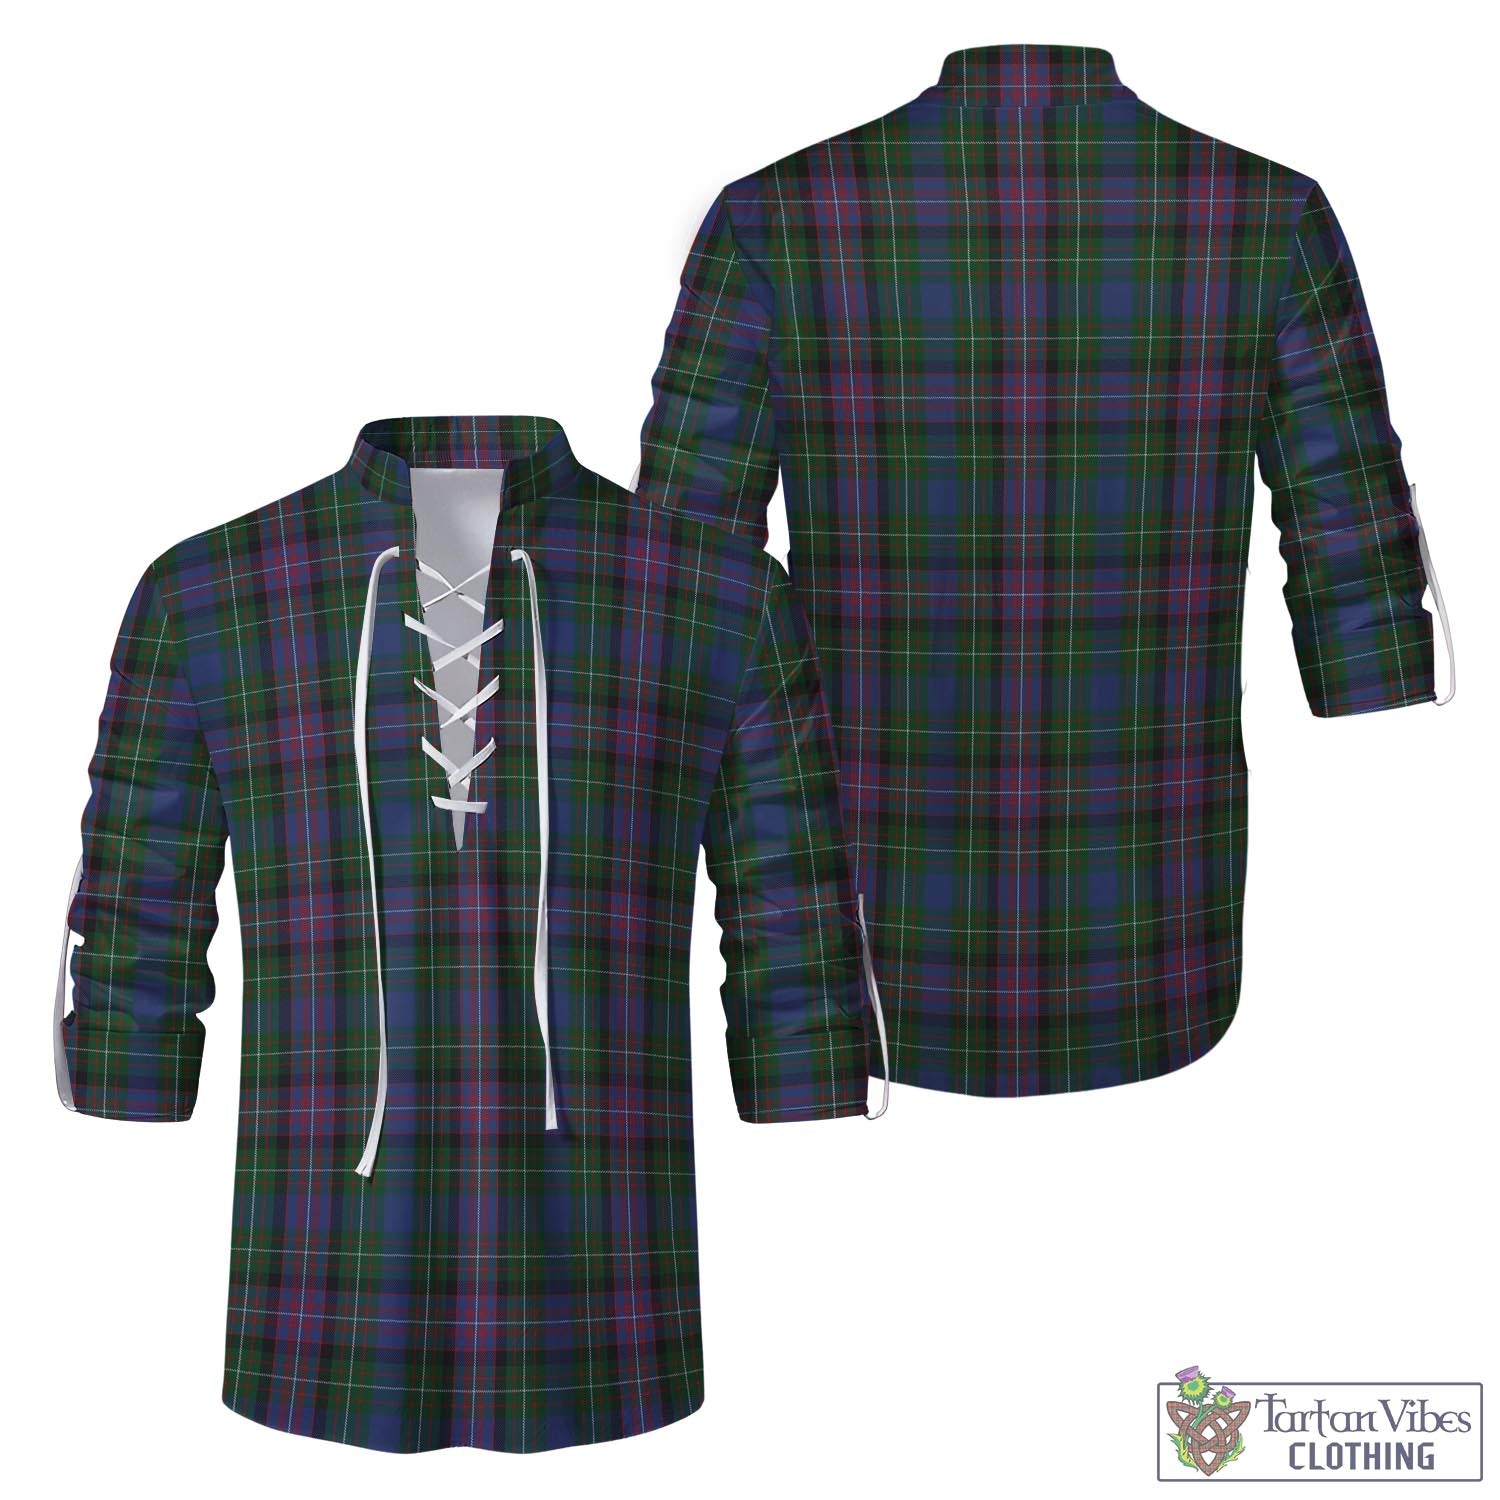 Tartan Vibes Clothing Rankin Tartan Men's Scottish Traditional Jacobite Ghillie Kilt Shirt